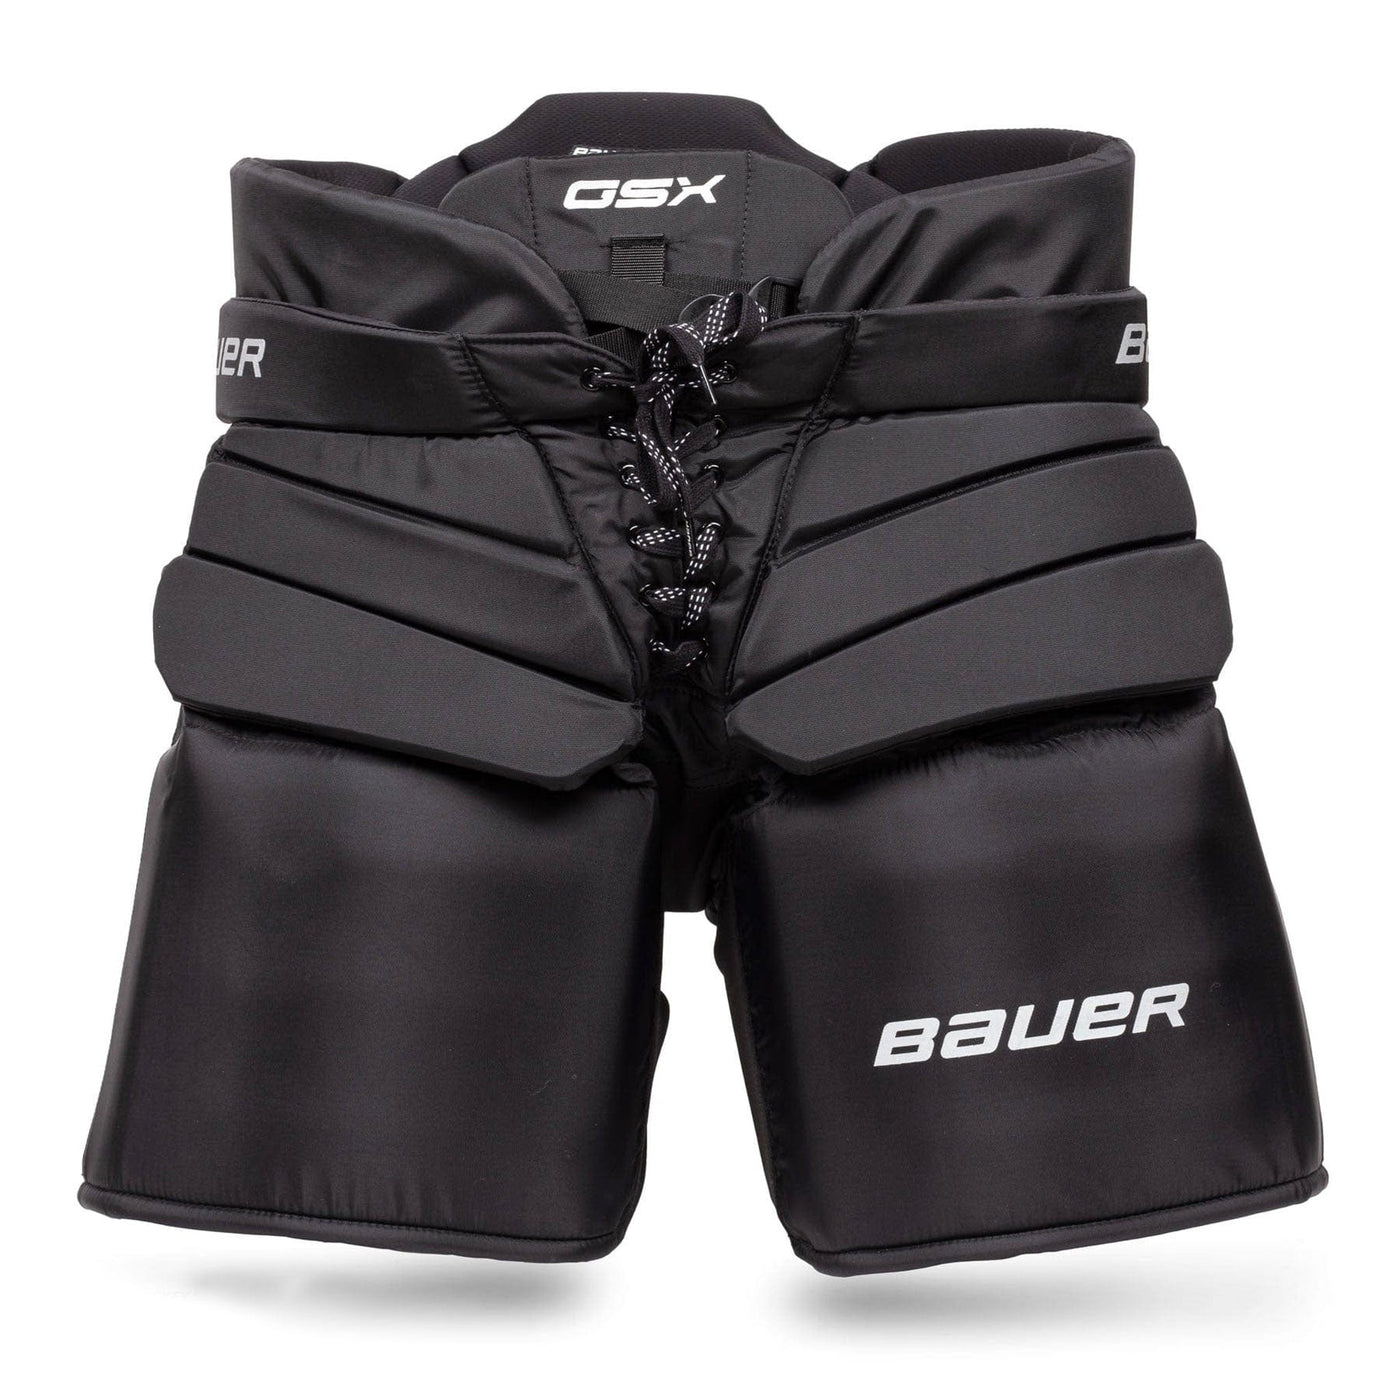 Bauer GSX Senior Goalie Pants S20 - The Hockey Shop Source For Sports